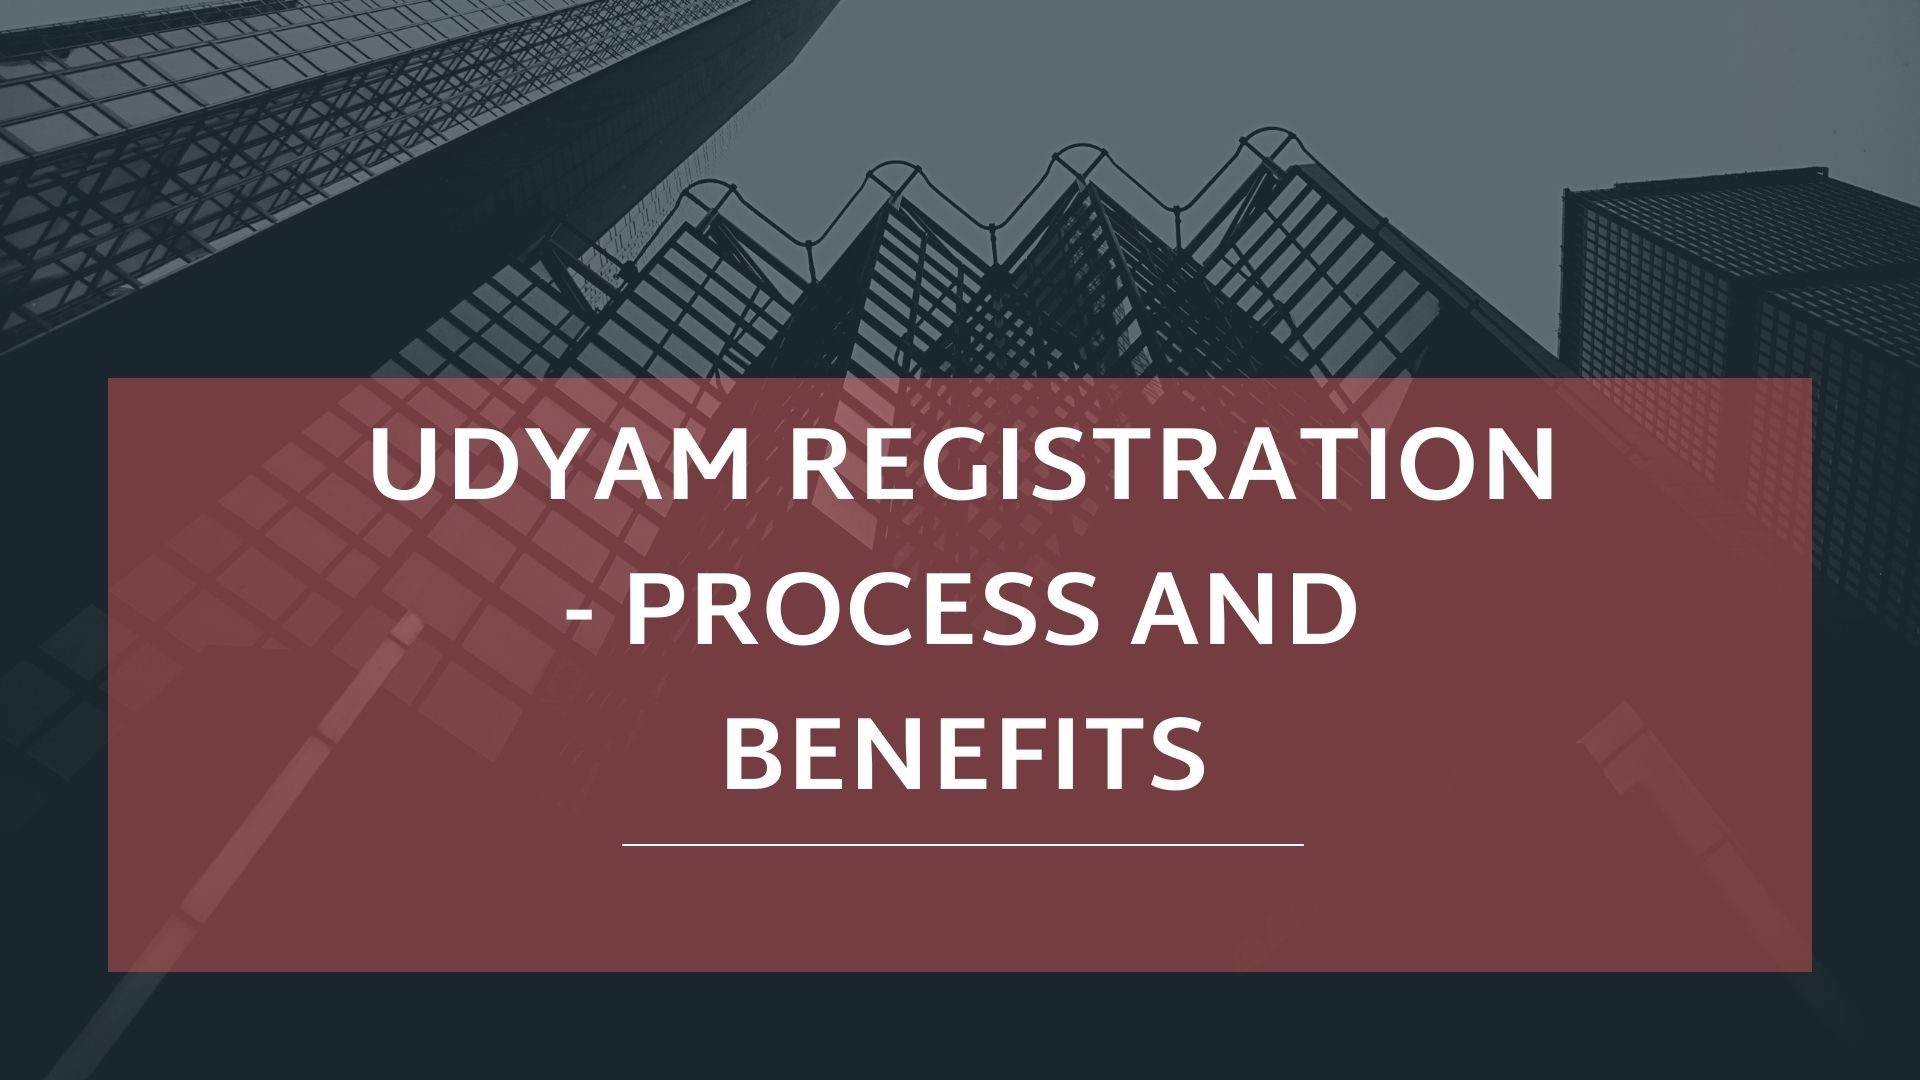 Udyam registration - process and benefits